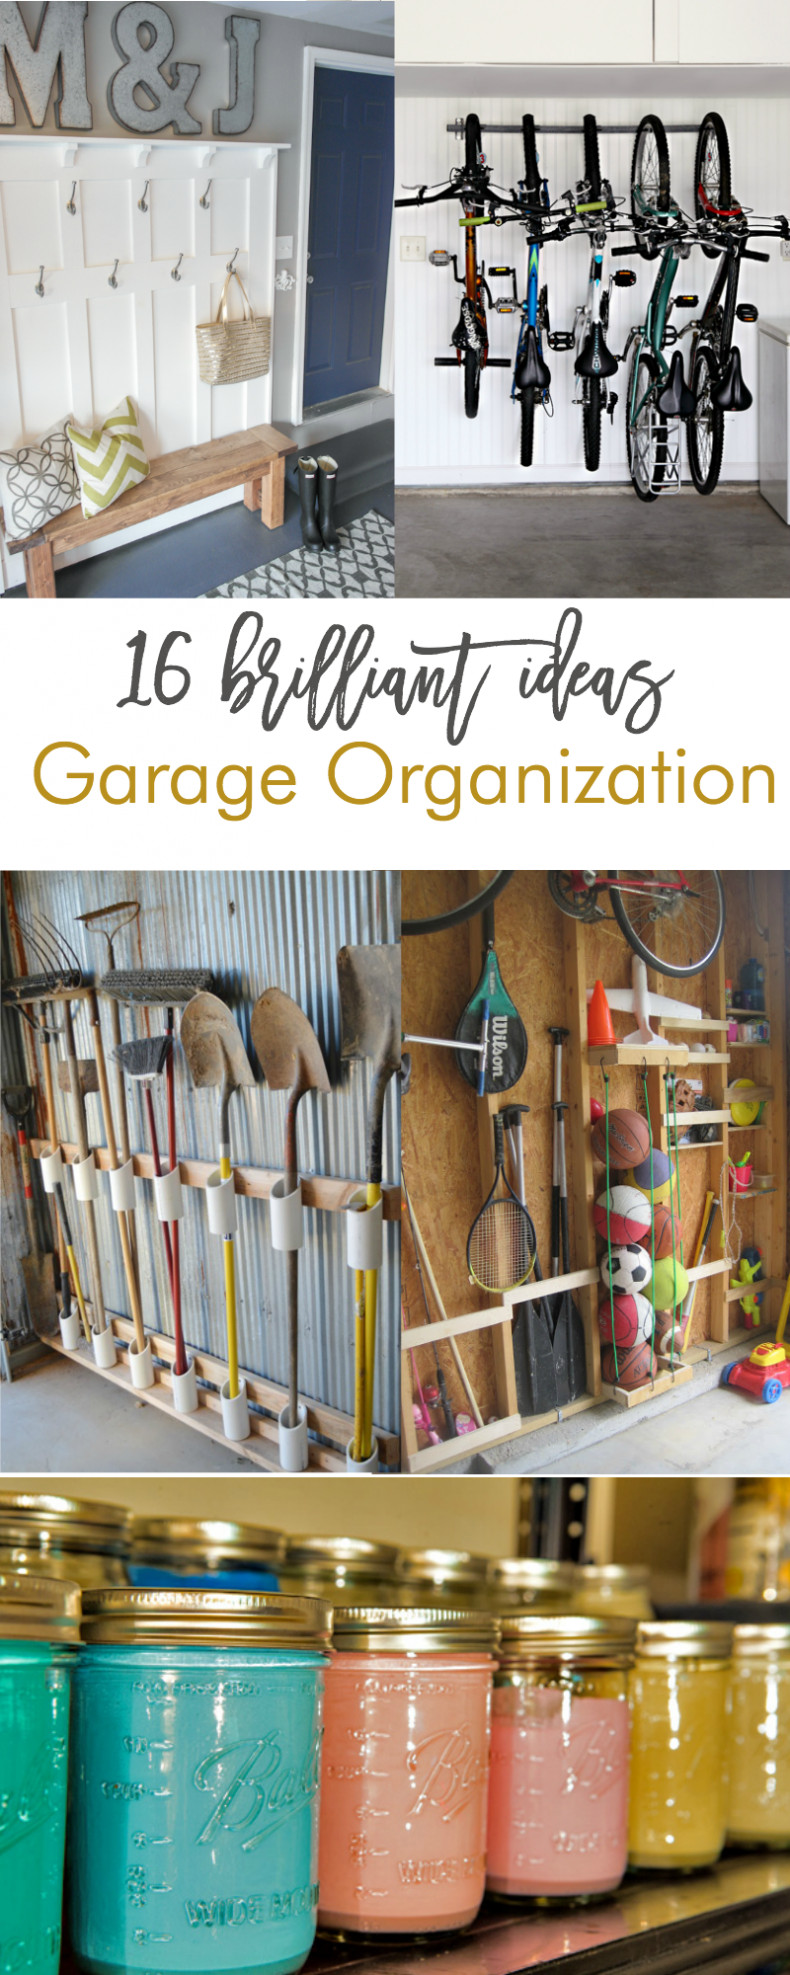 Garage Organization Tips
 16 Brilliant DIY Garage Organization Ideas